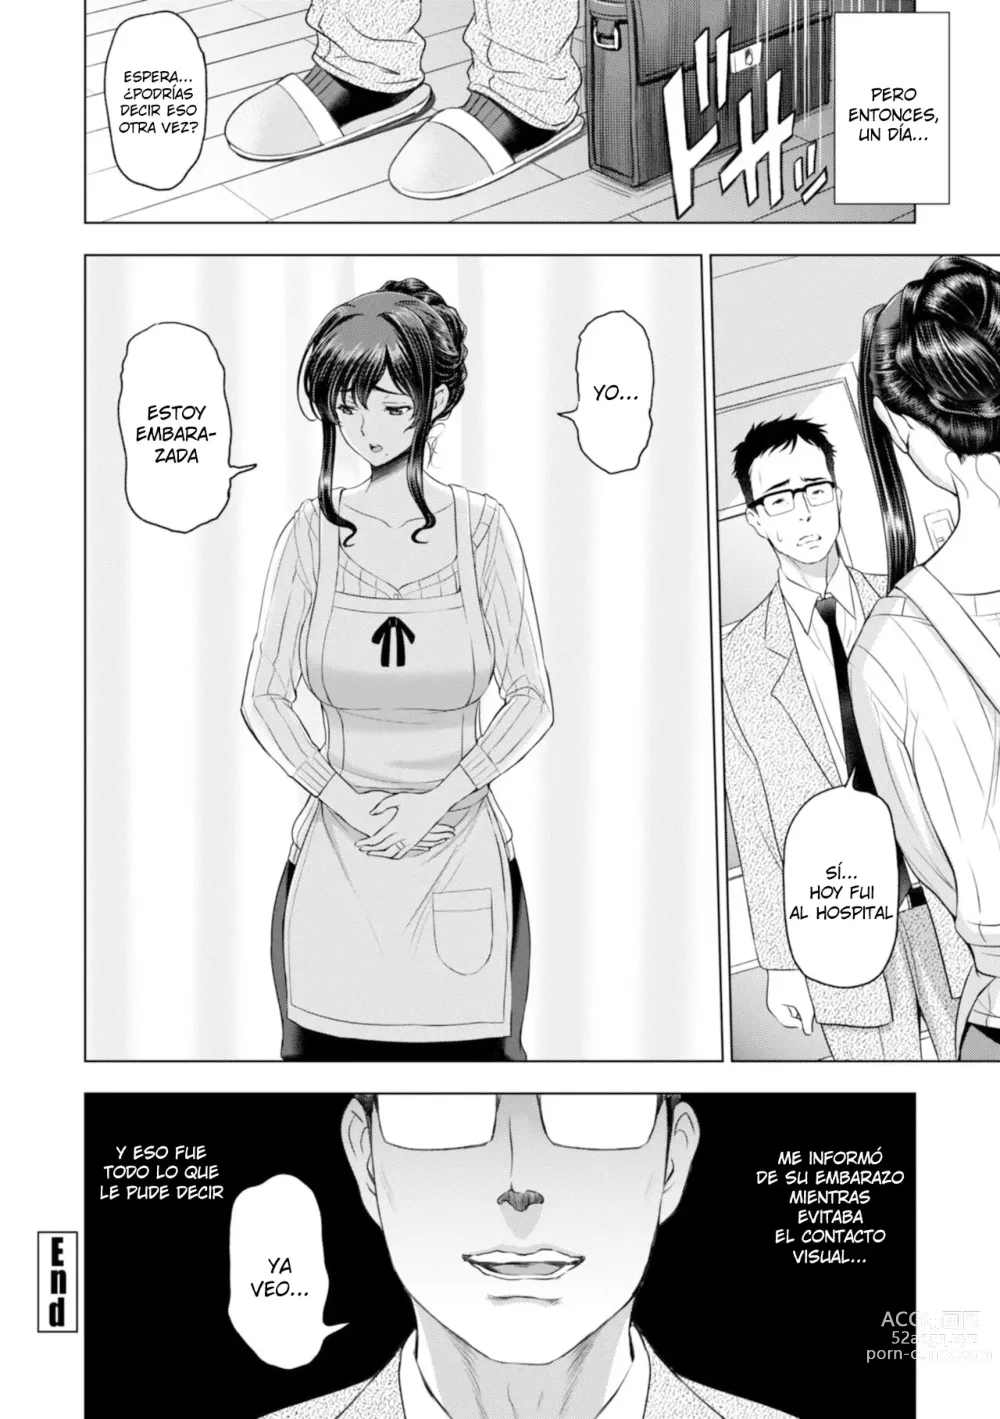 Page 20 of manga Nettori Netorare Ep.4 ~Esposa . El caso de Saori Sudou (epílogo)~